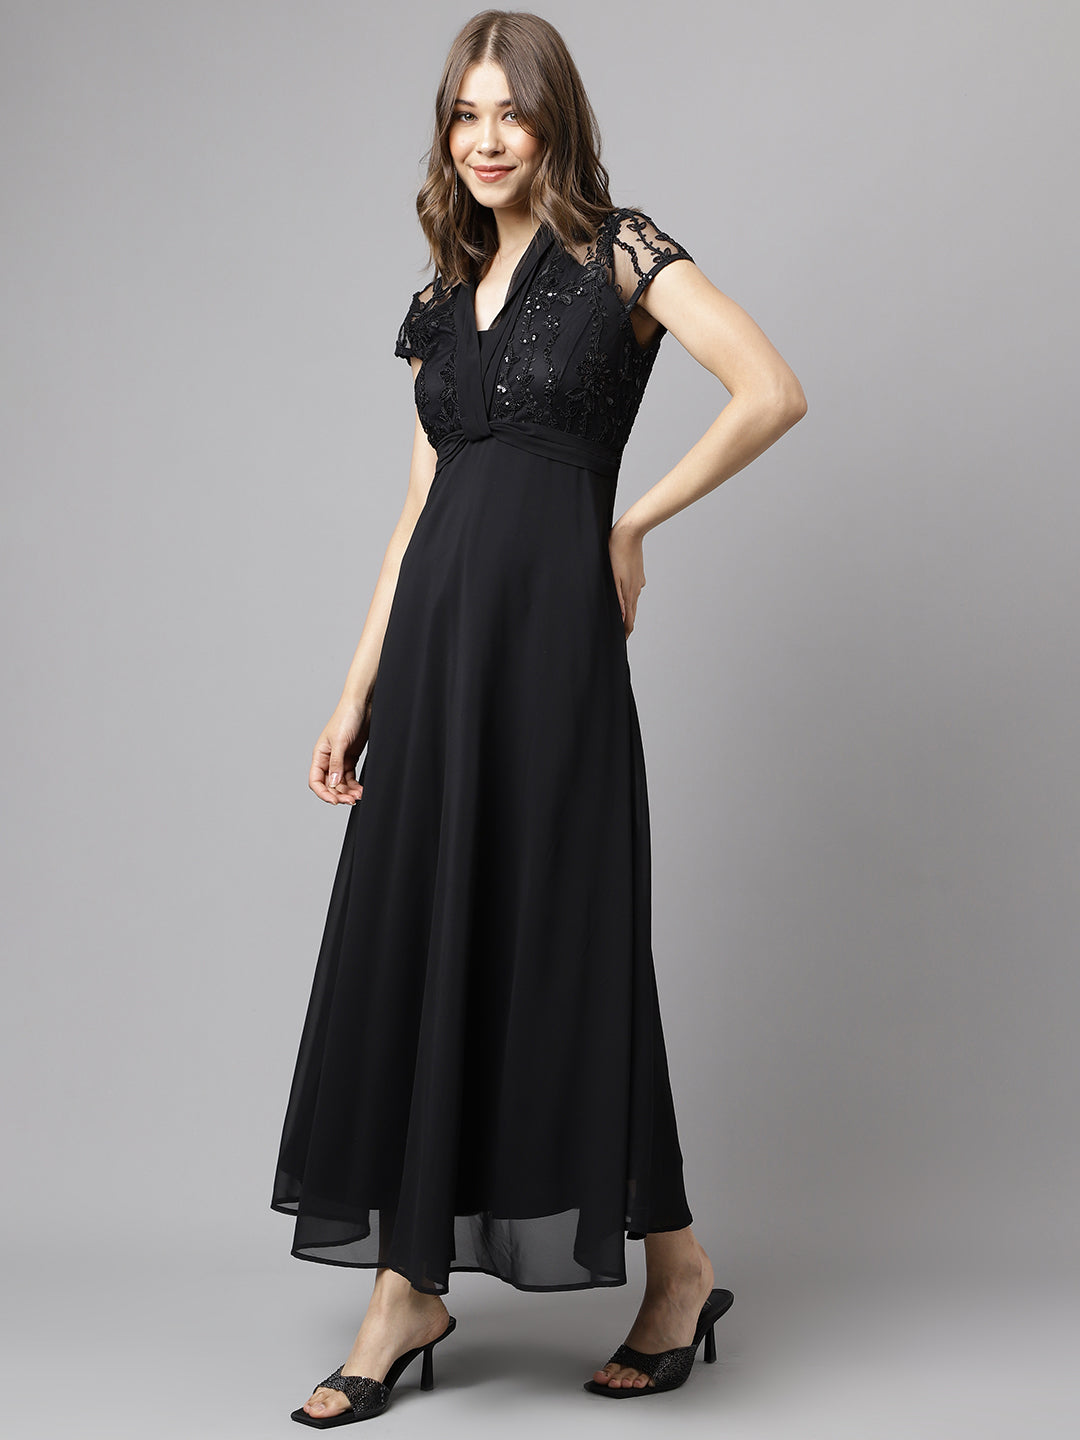 Black Cap Sleeves Solid Sequin Dress